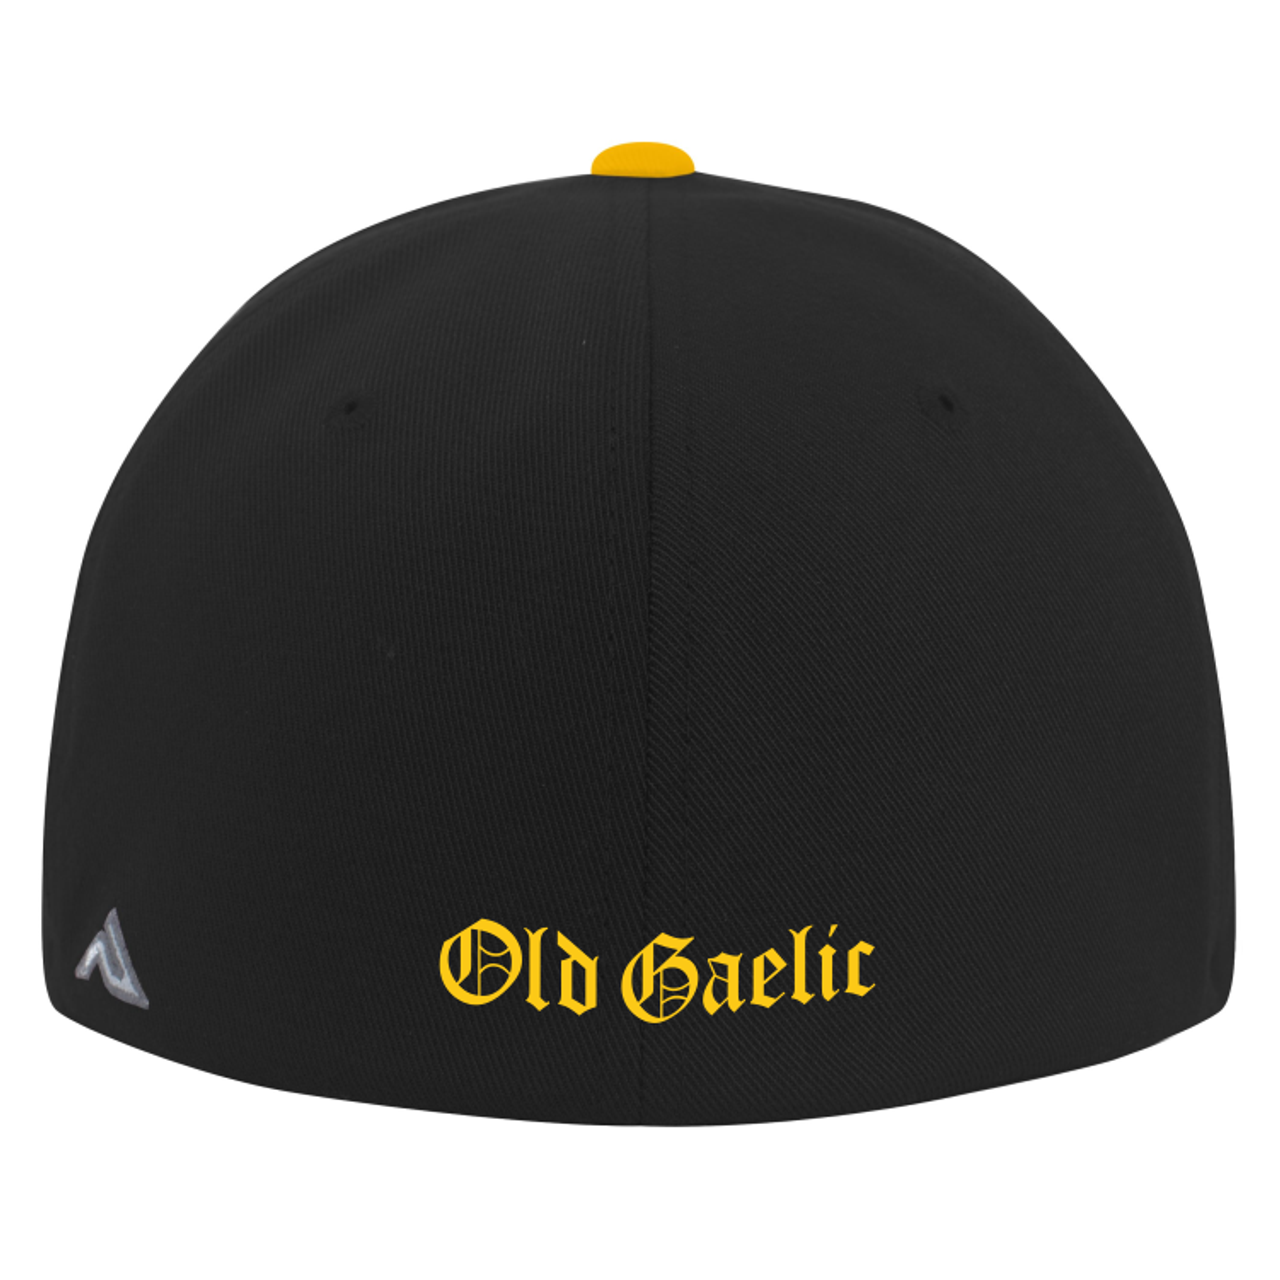 Old Gaelic Flat Bill Flexfit Hat